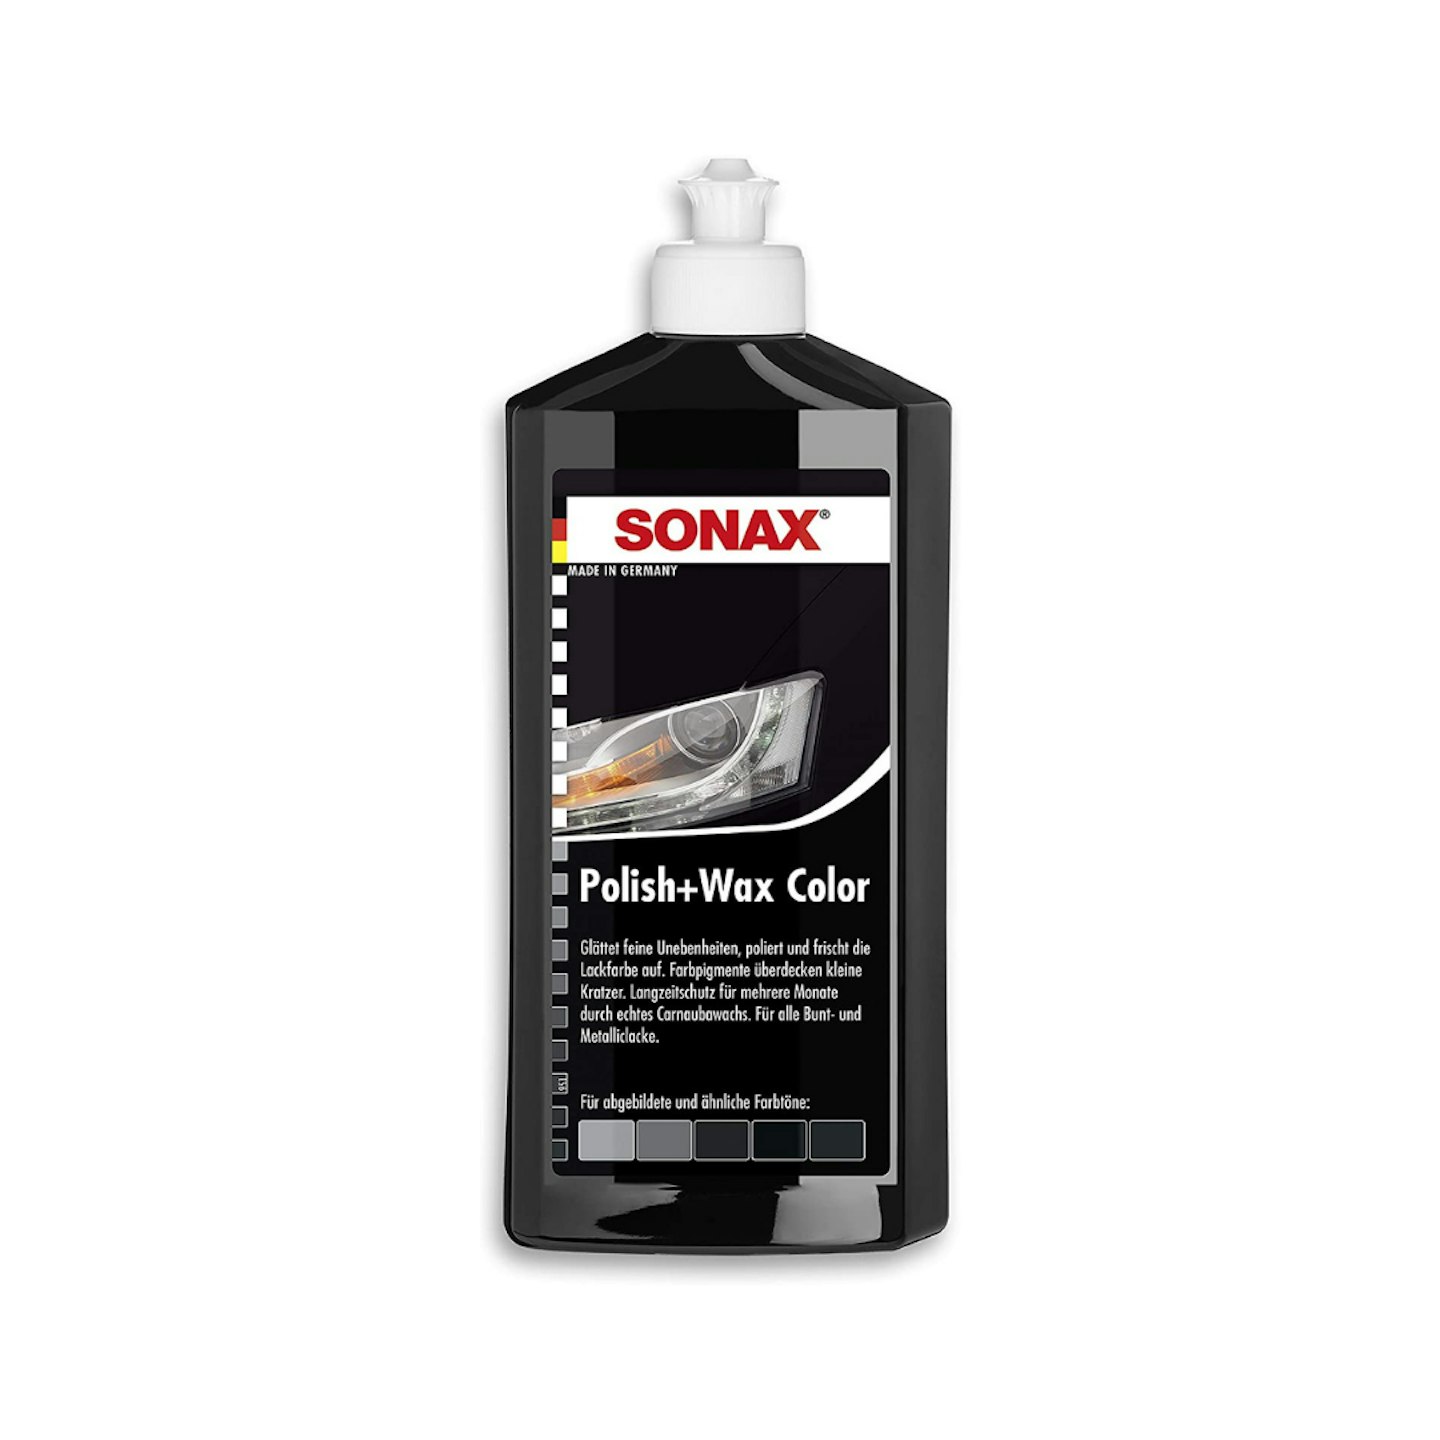 Sonax 296100 Polish and Wax